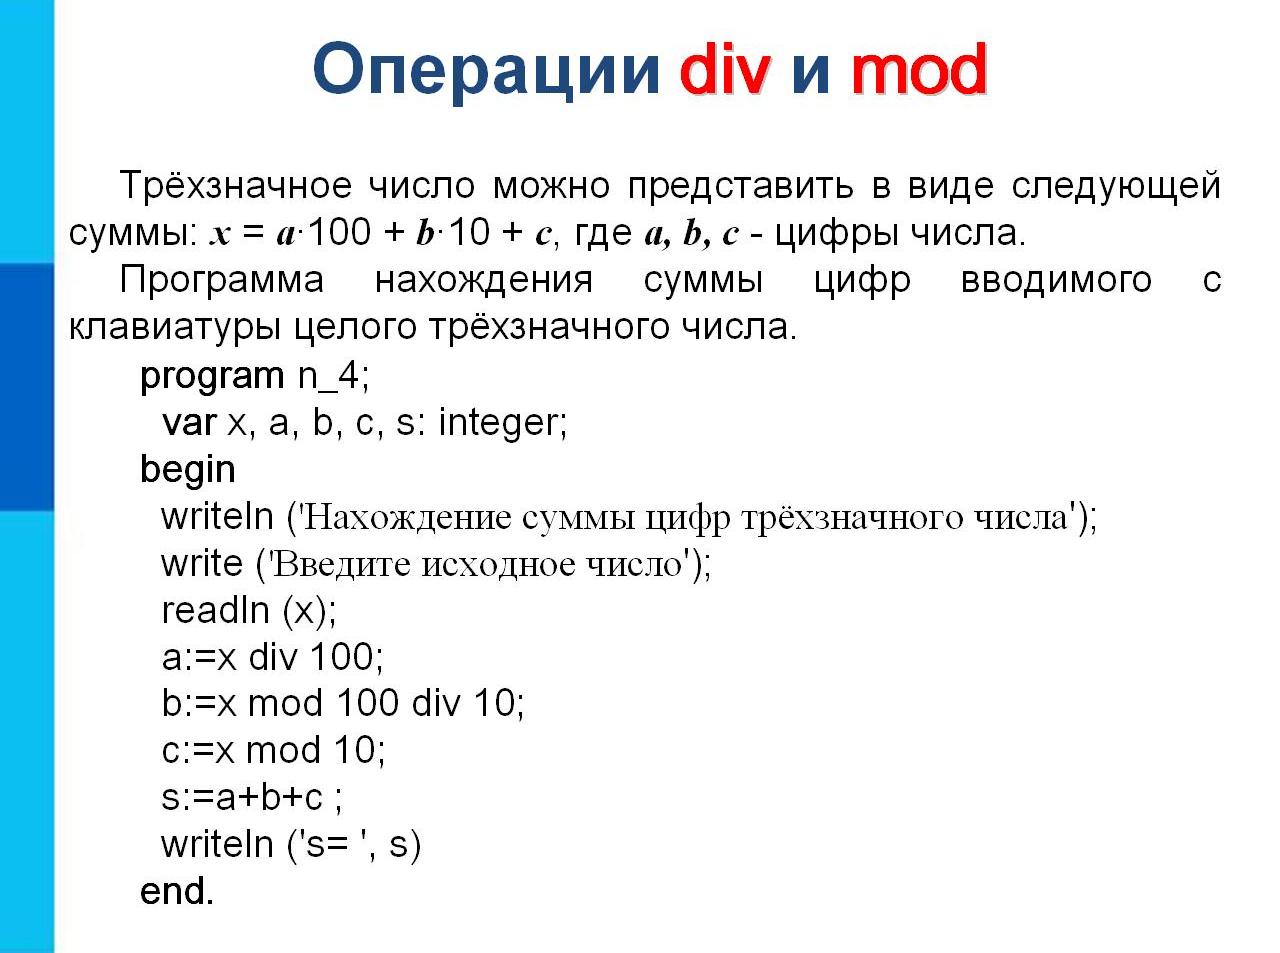 C a x mod b. Операции див и мод в Паскале. Div Mod. Программа div. Операция div и Mod.